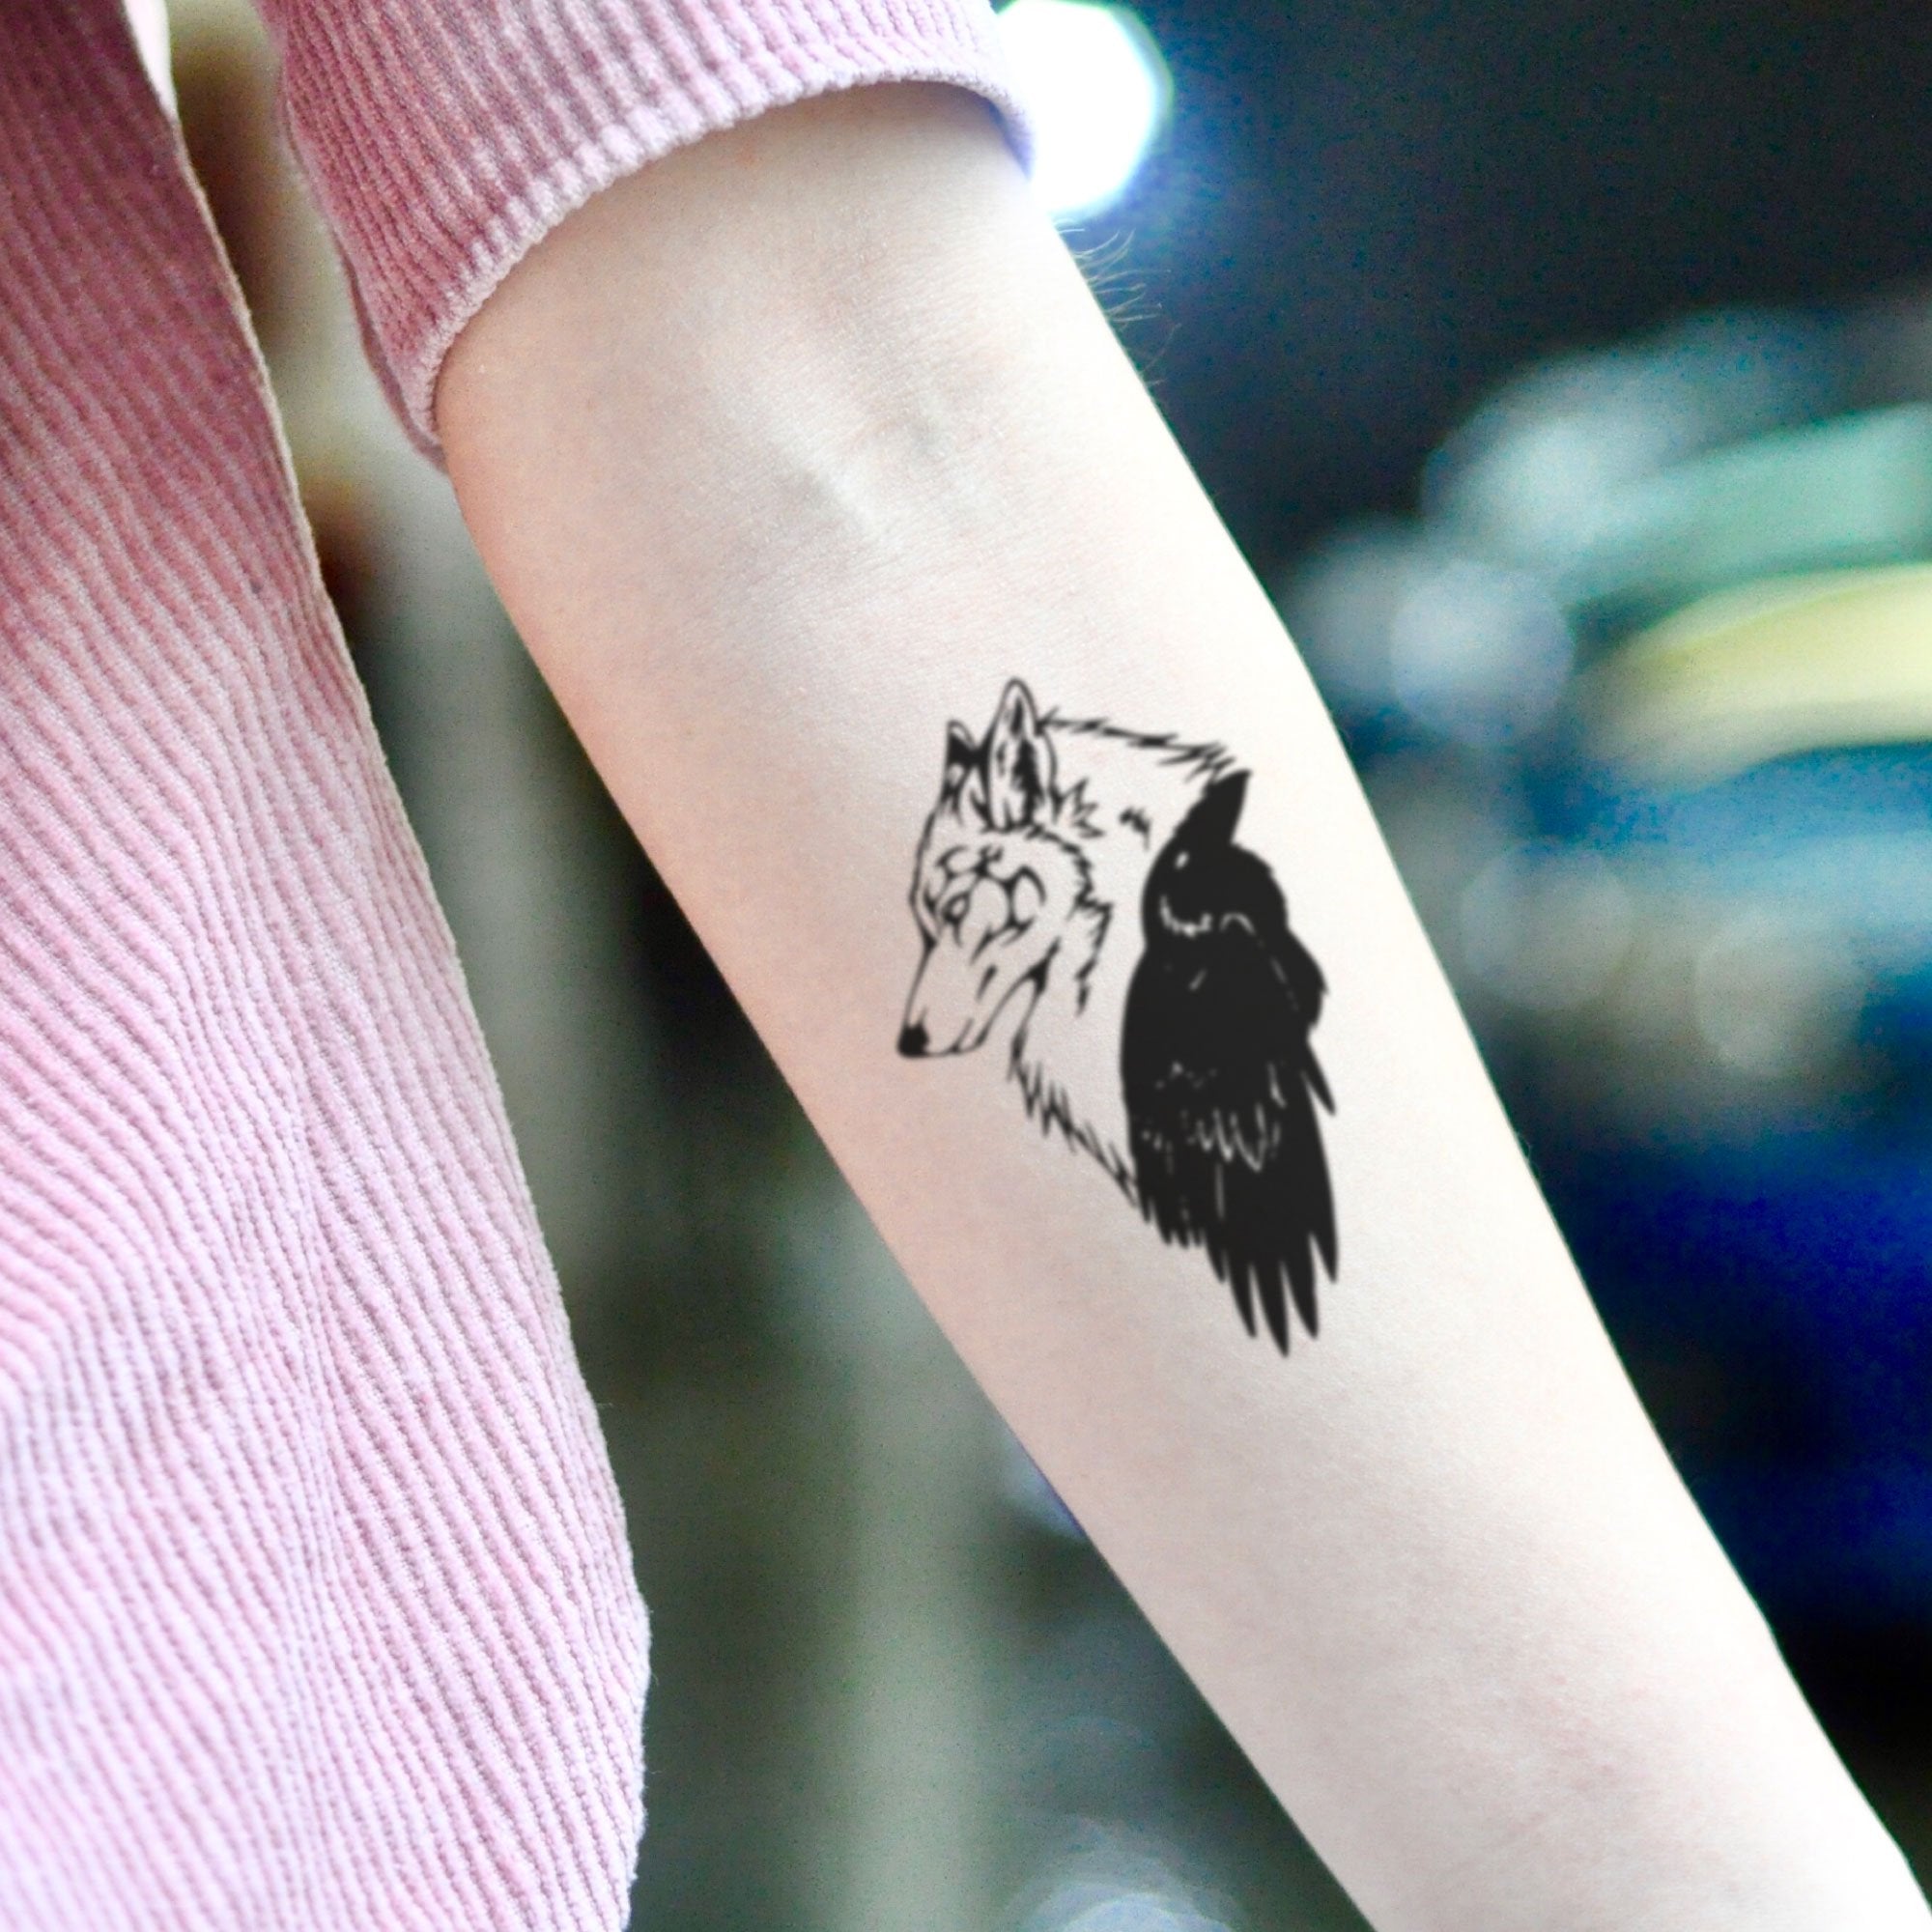 Tattoo uploaded by John Kingston • #norse #raven #valknut #celtic #viking  #trees #sleeve #blackandwhite #valknuttattoo #vikingtattoos #Celticband  #celtictattoo #forearm #innerarm #project #odin #thor • Tattoodo